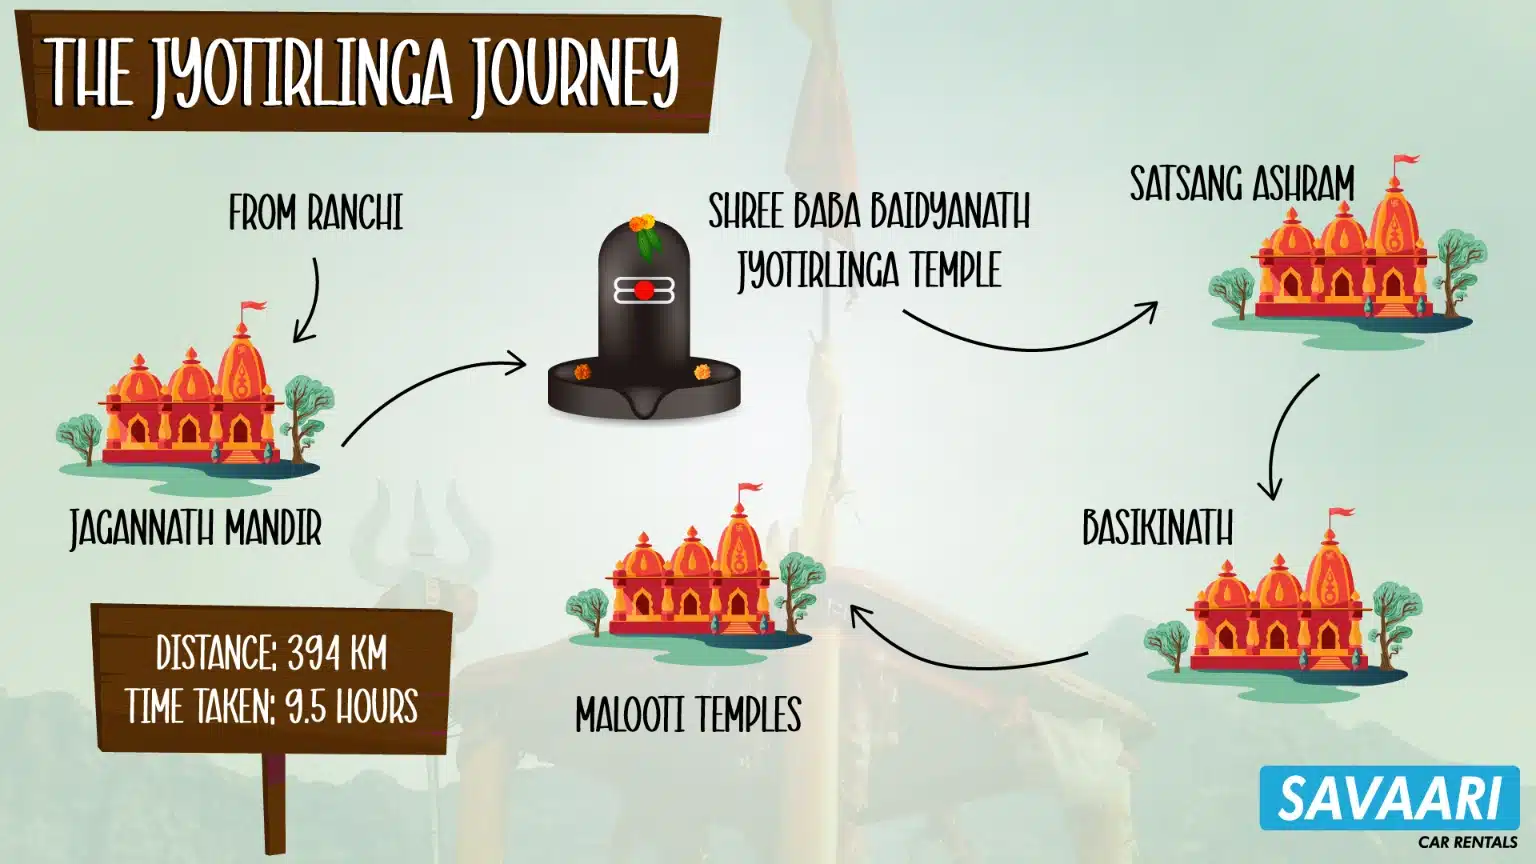 How to reach Baidyanath Jyotirlinga